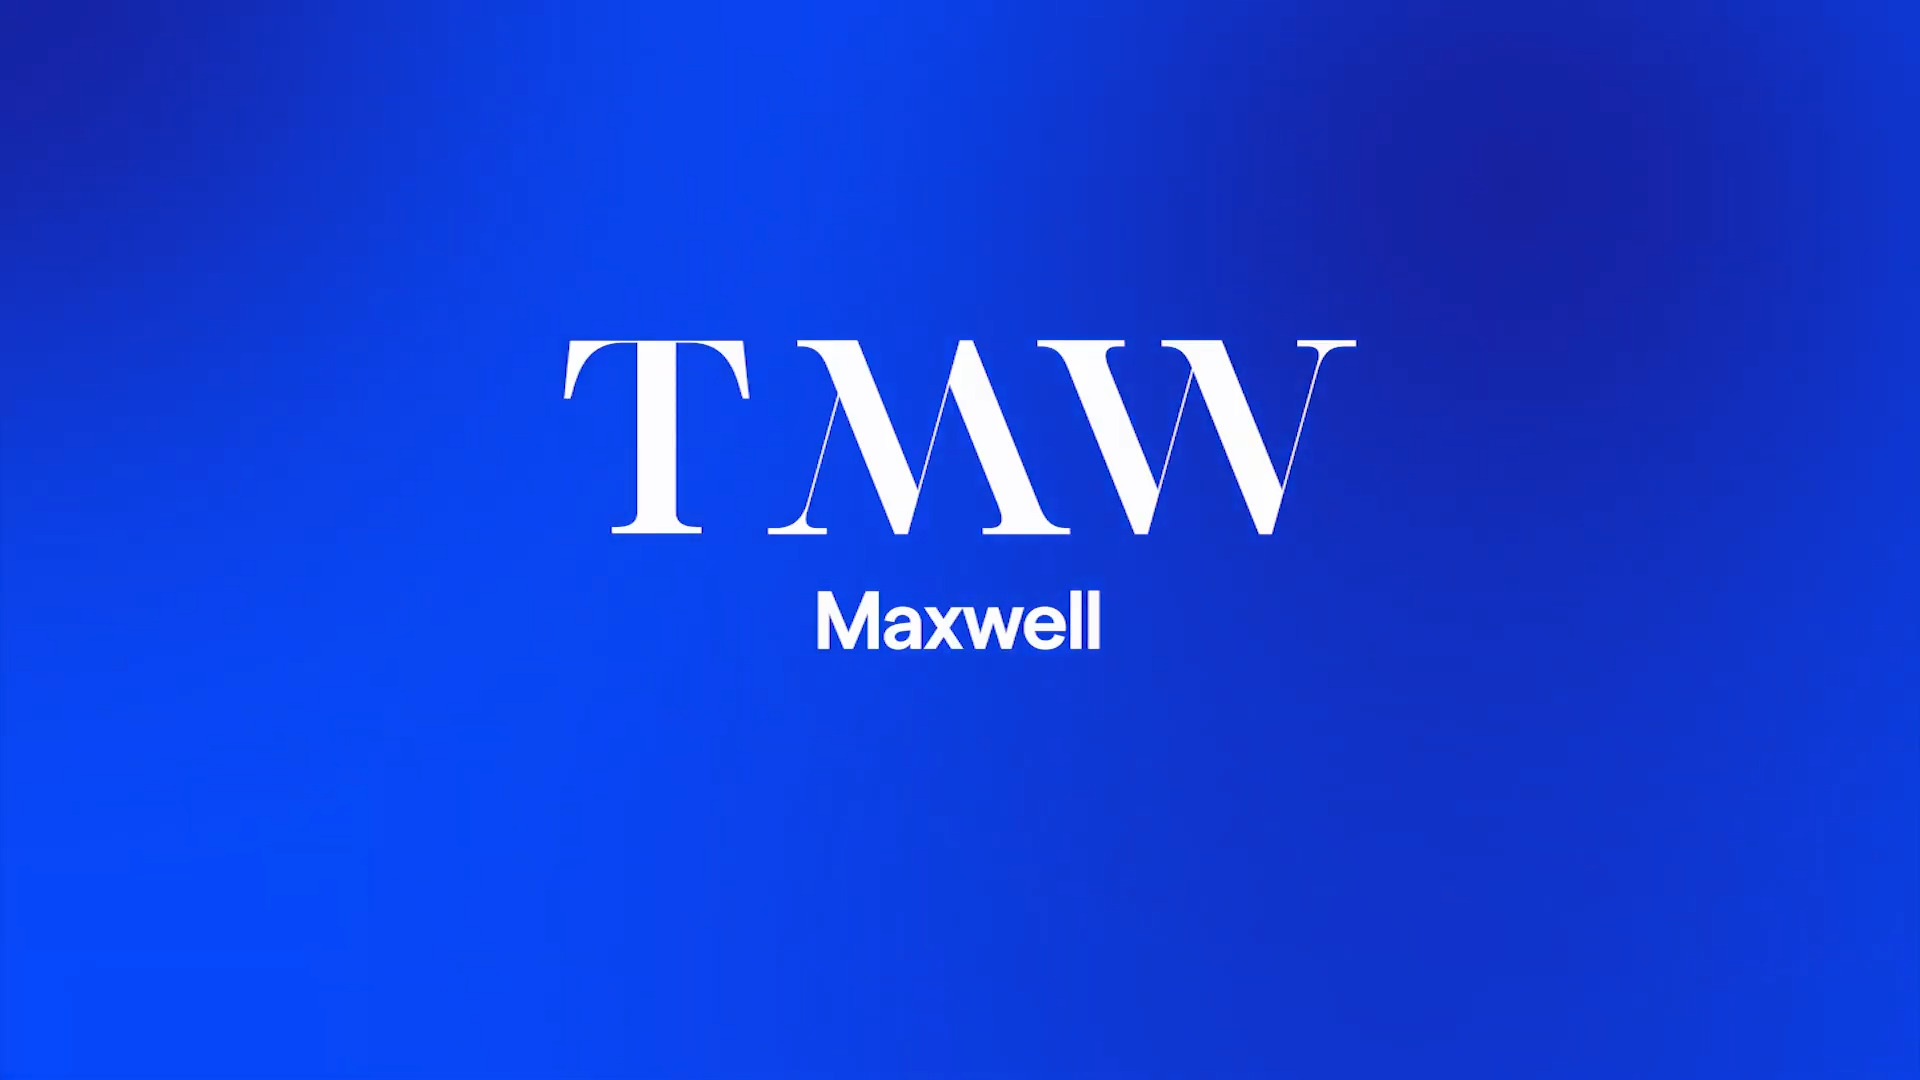 TMW Maxwell Flythrough Video